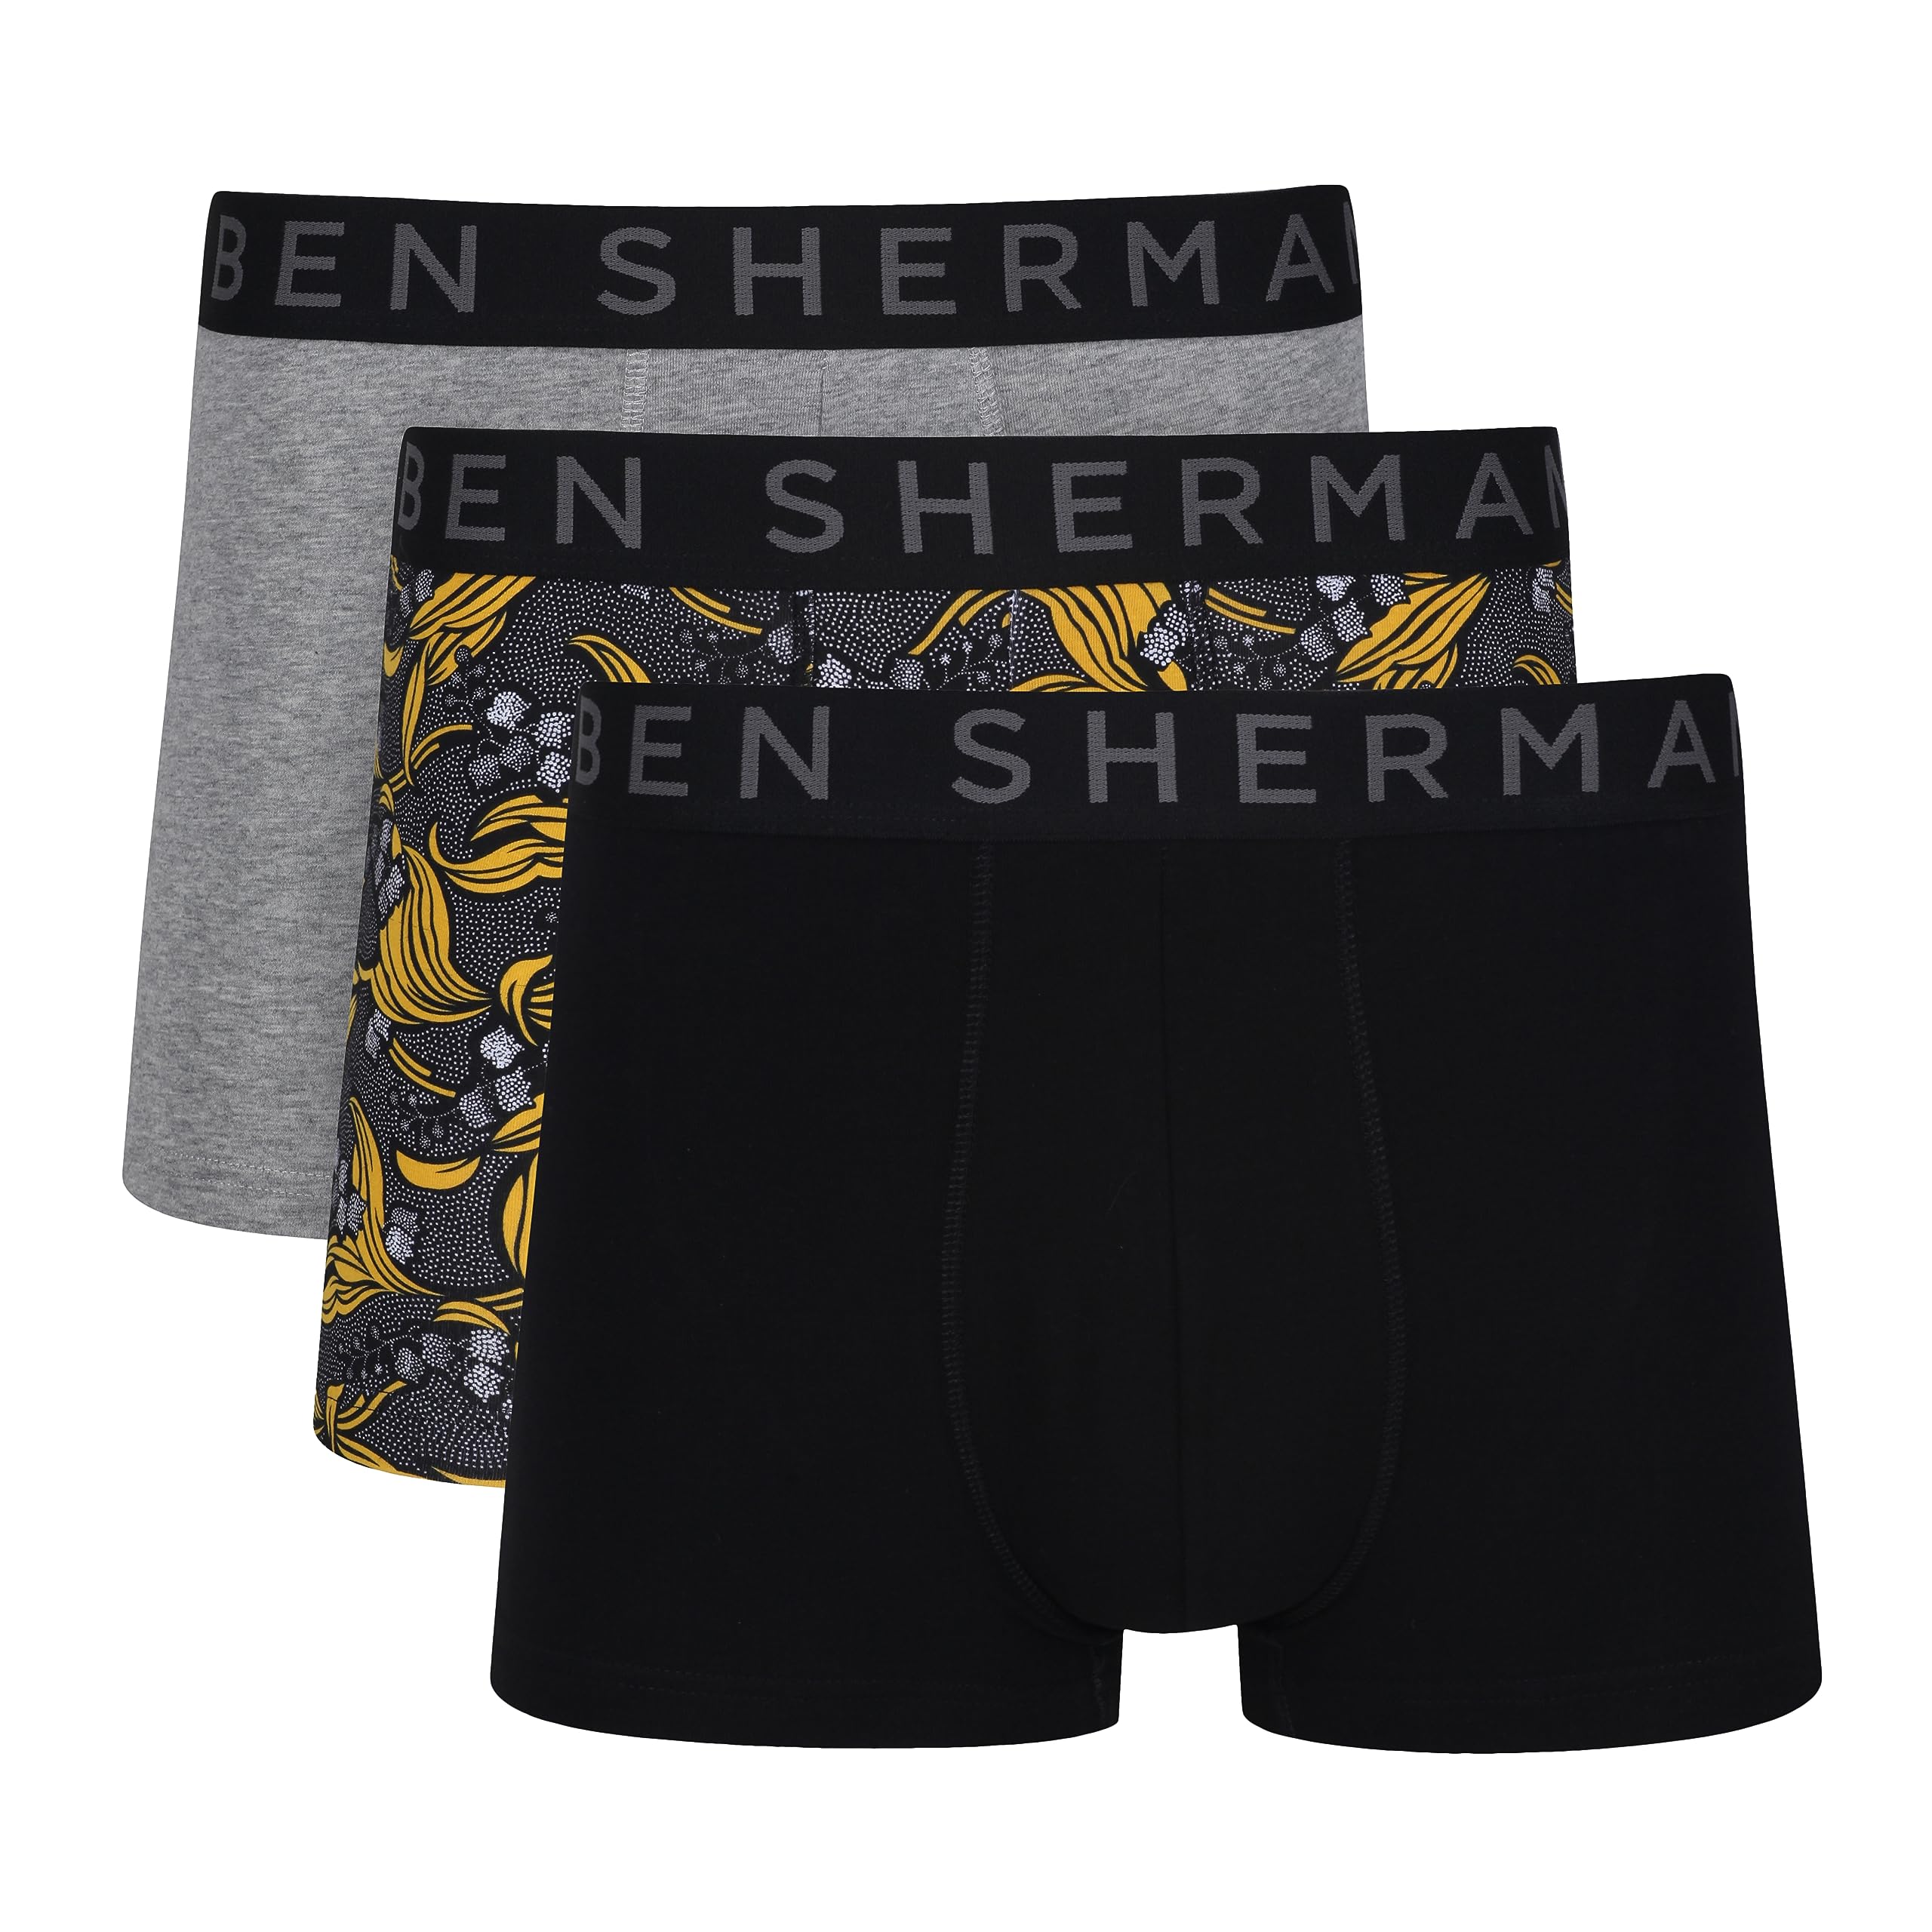 Ben Sherman Herren Men's Boxer Shorts in Black/Pattern/Grey | Soft Touch Cotton Trunks with Elasticated Waistband Boxershorts, M